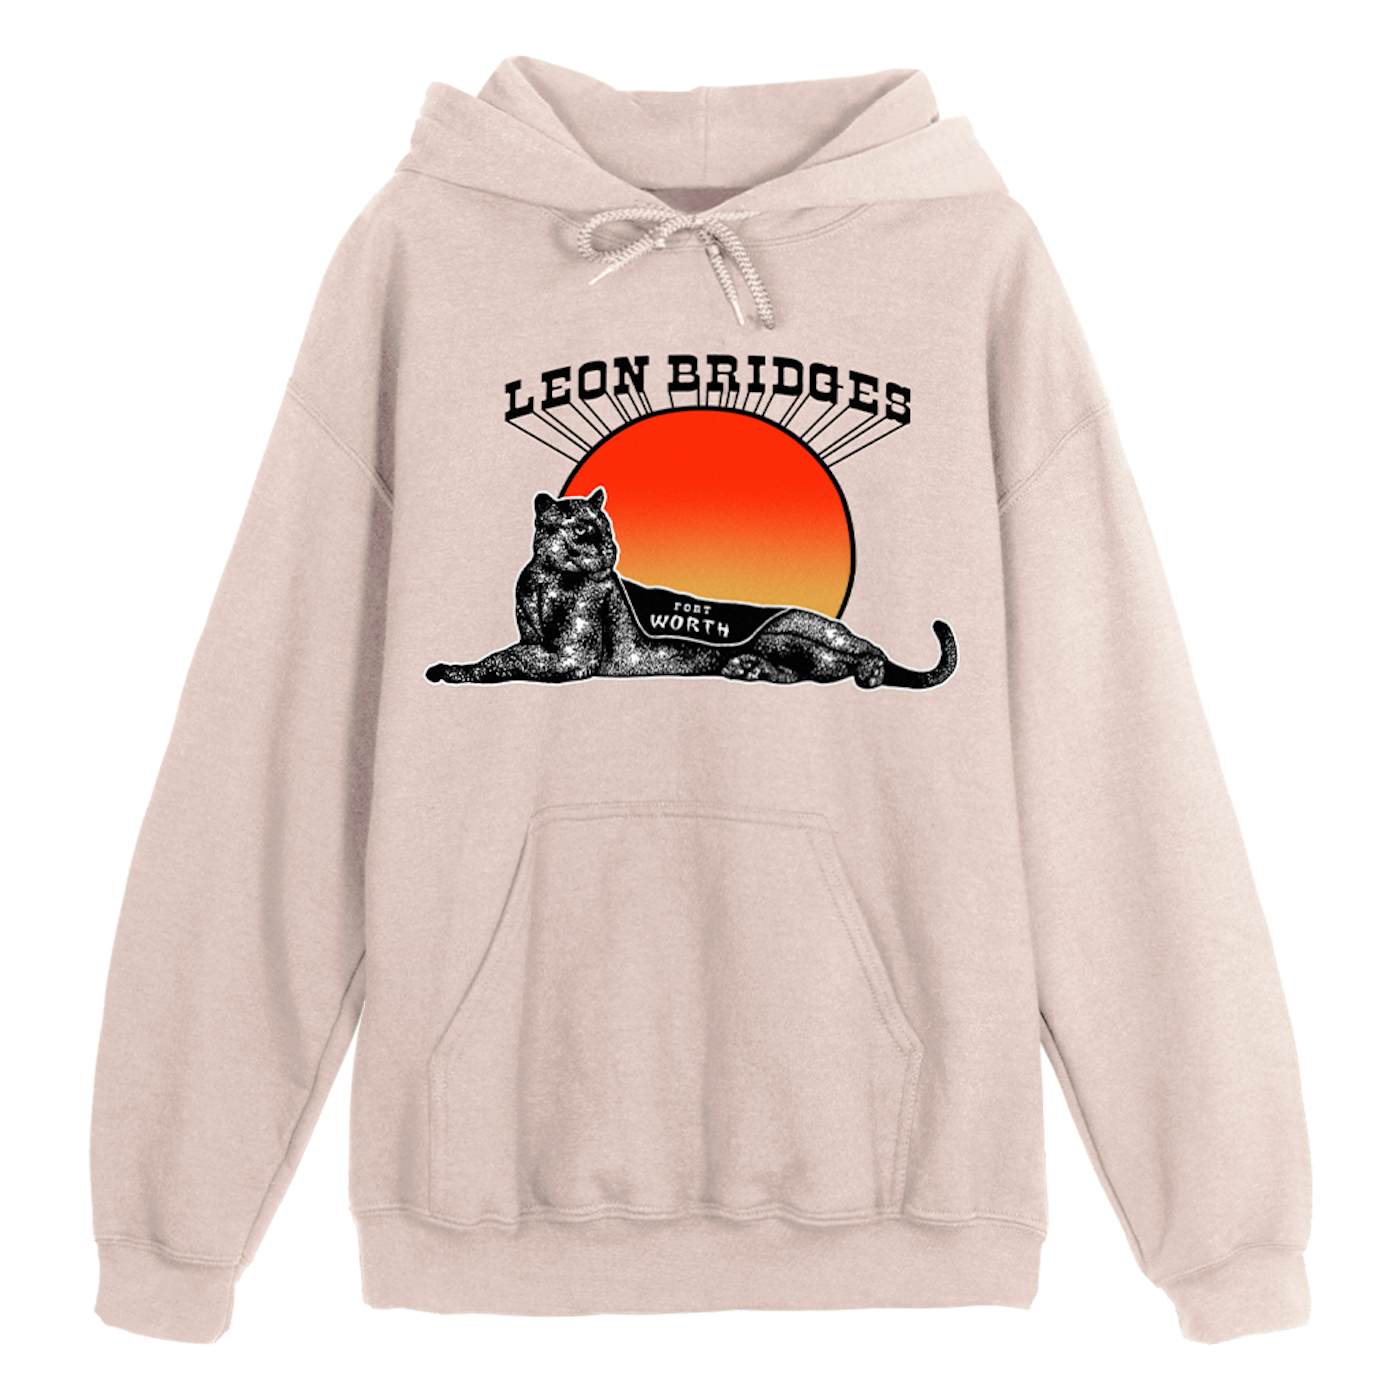 Leon Bridges Panther Pullover Hoodie